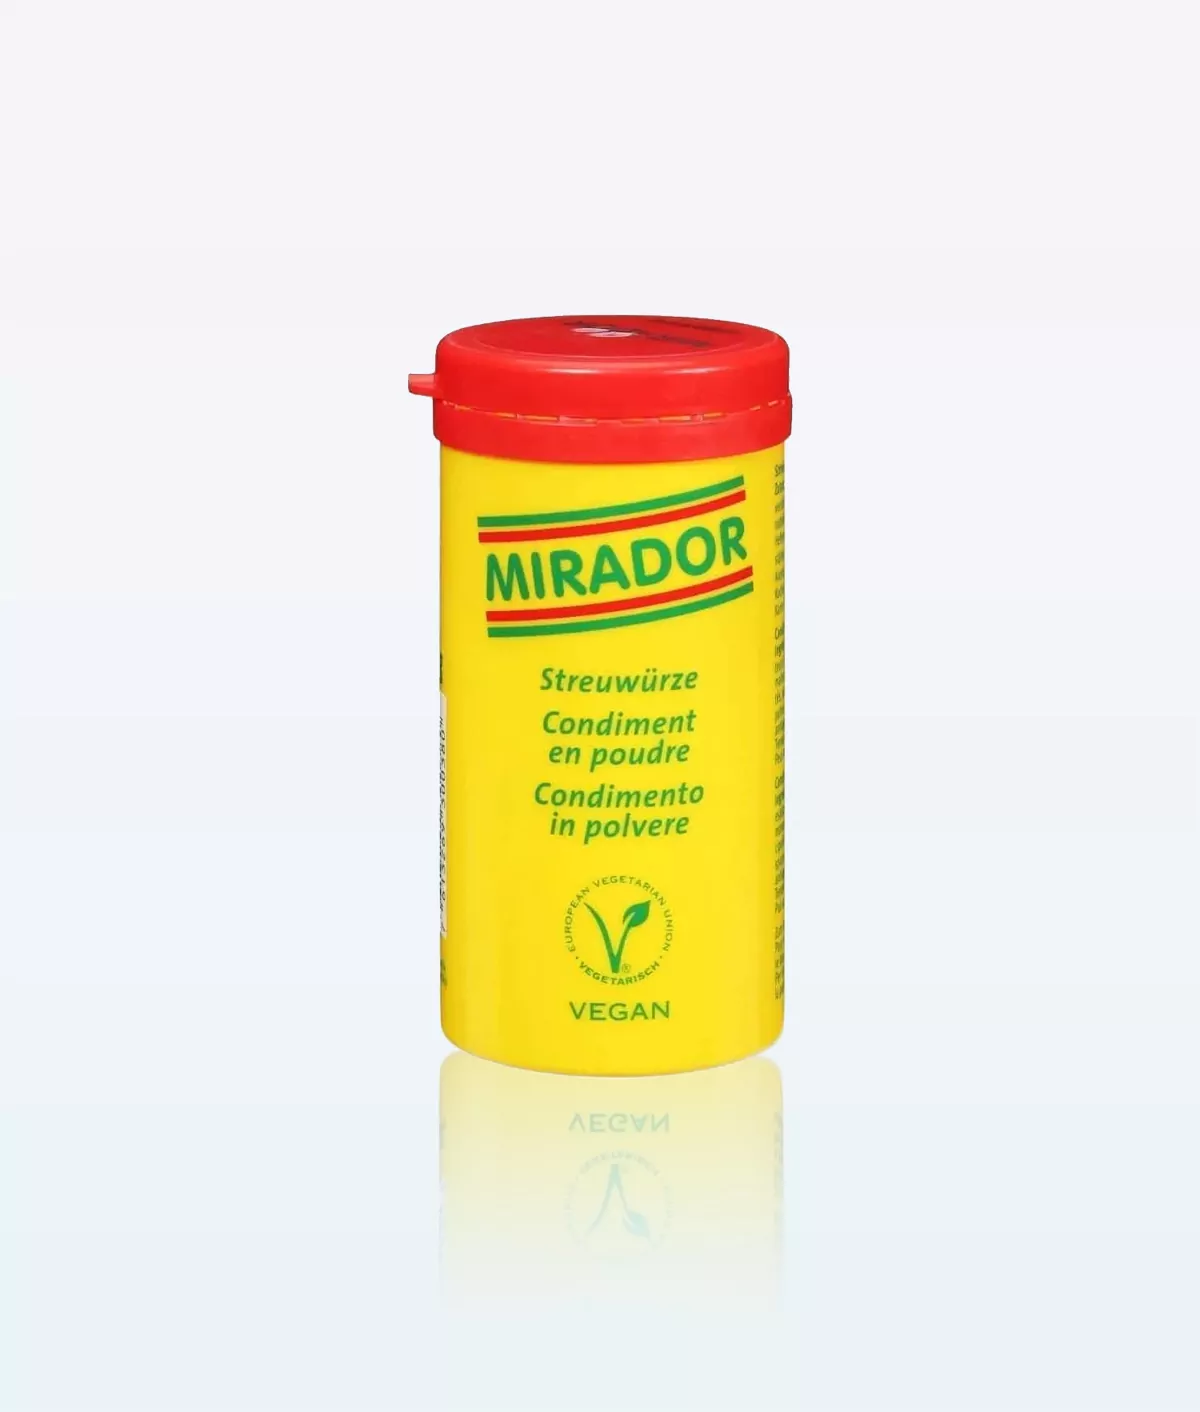 Mirador Condiment powder Vegan 90g